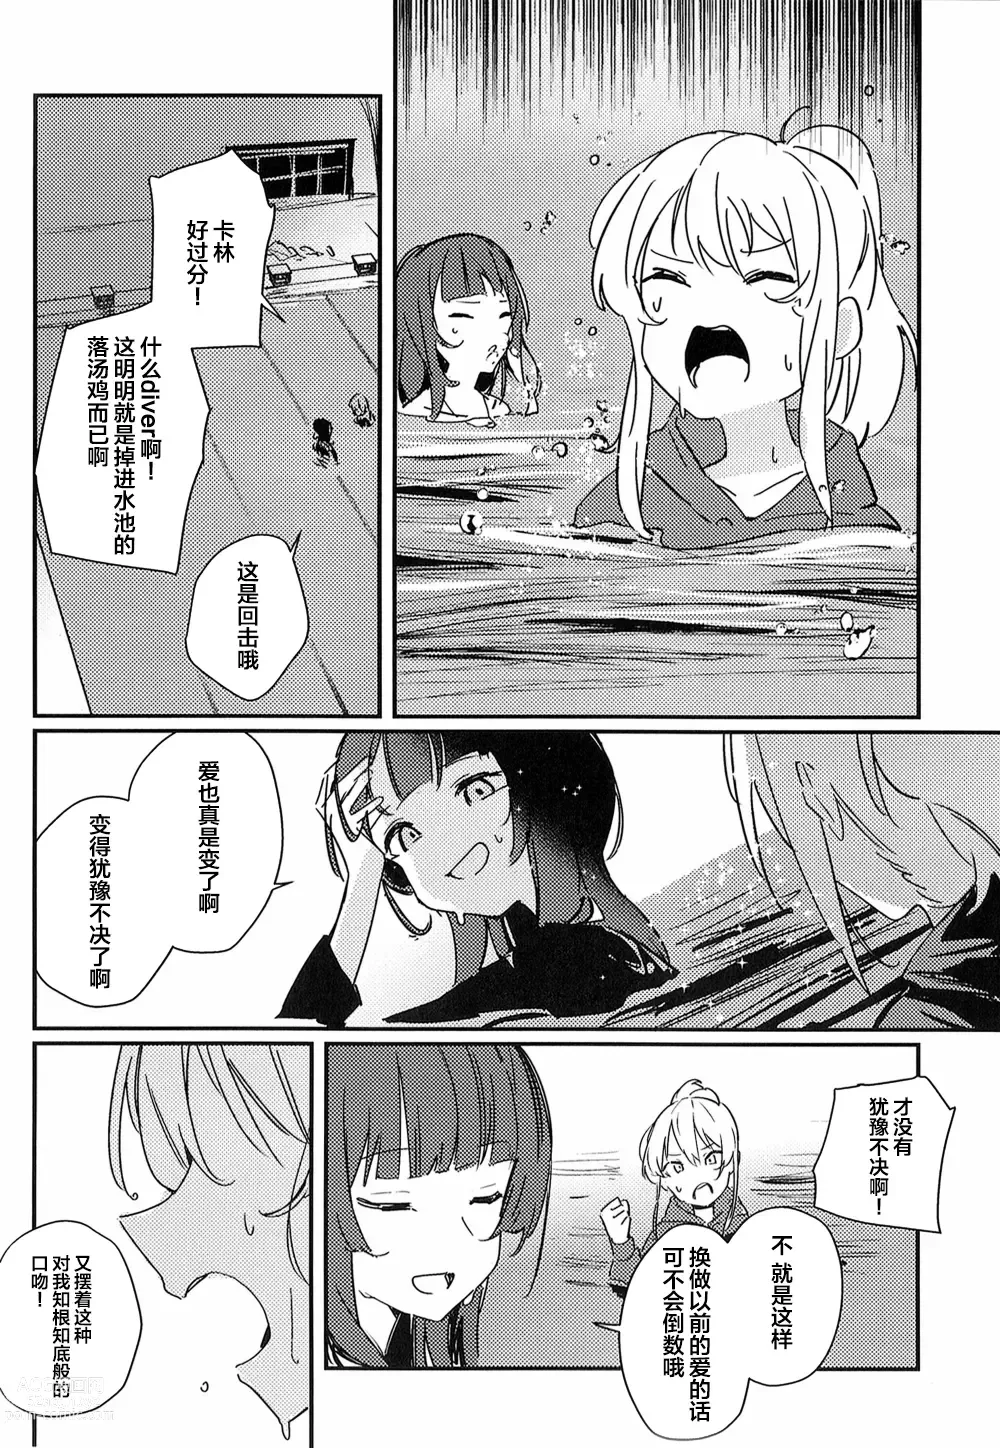 Page 24 of doujinshi MIRROR